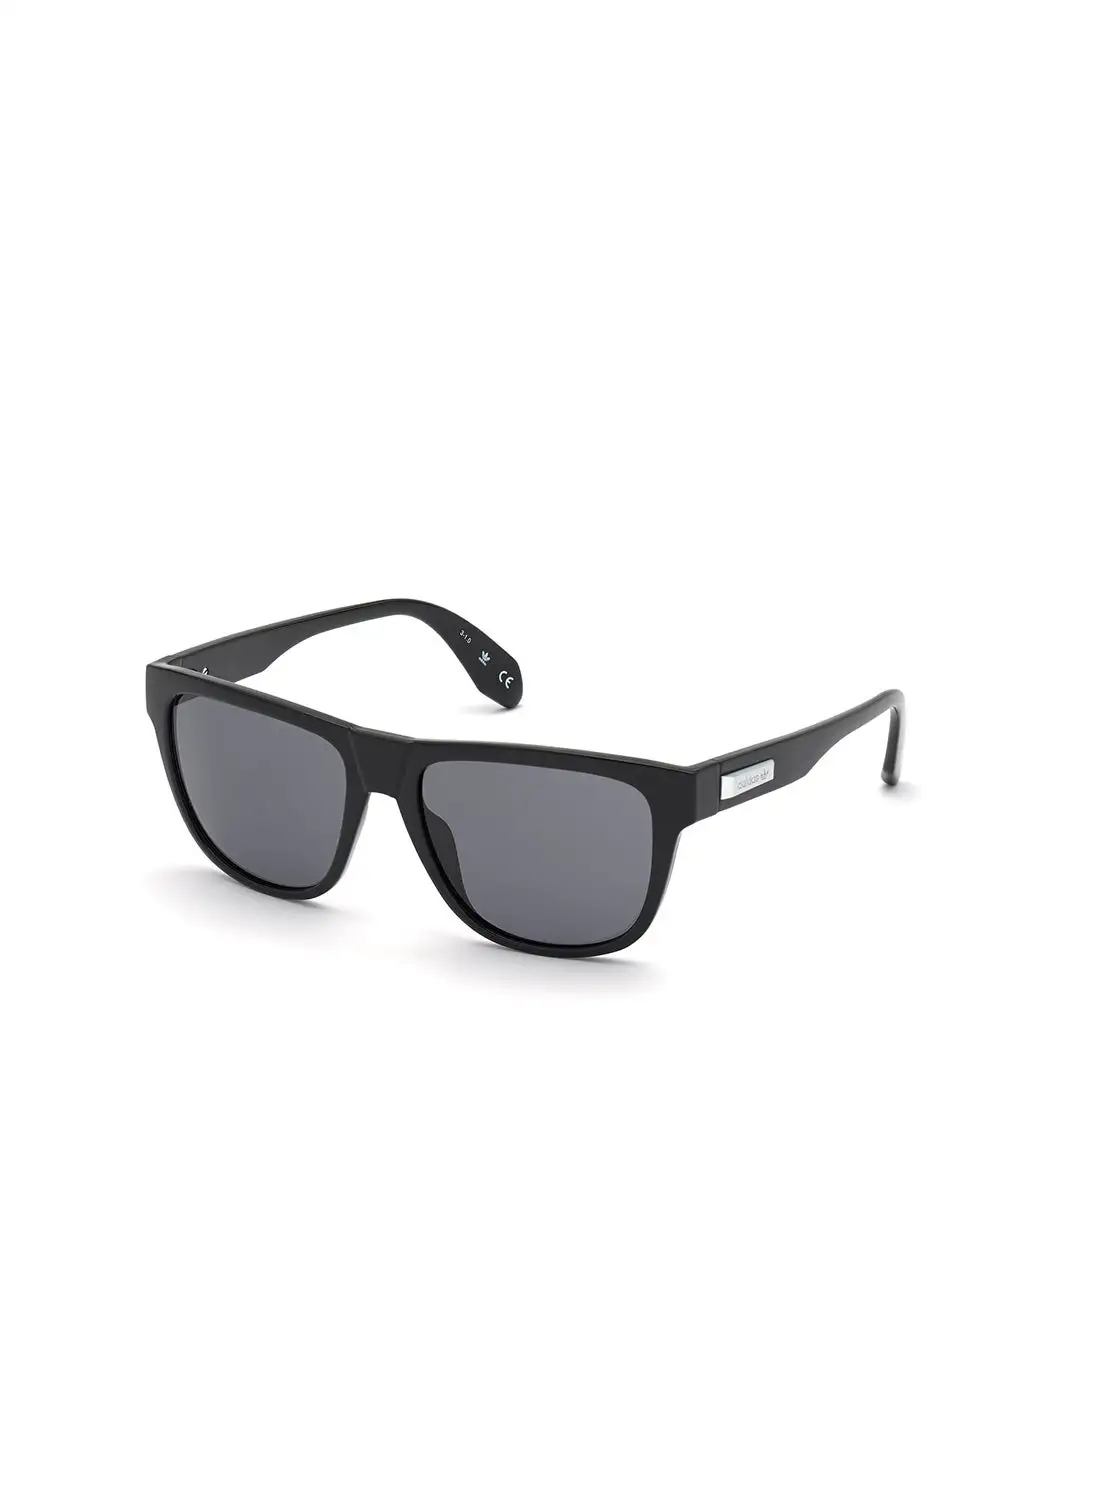 Adidas Unisex UV Protection Navigator Sunglasses - OR003501A56 - Lens Size: 56 Mm